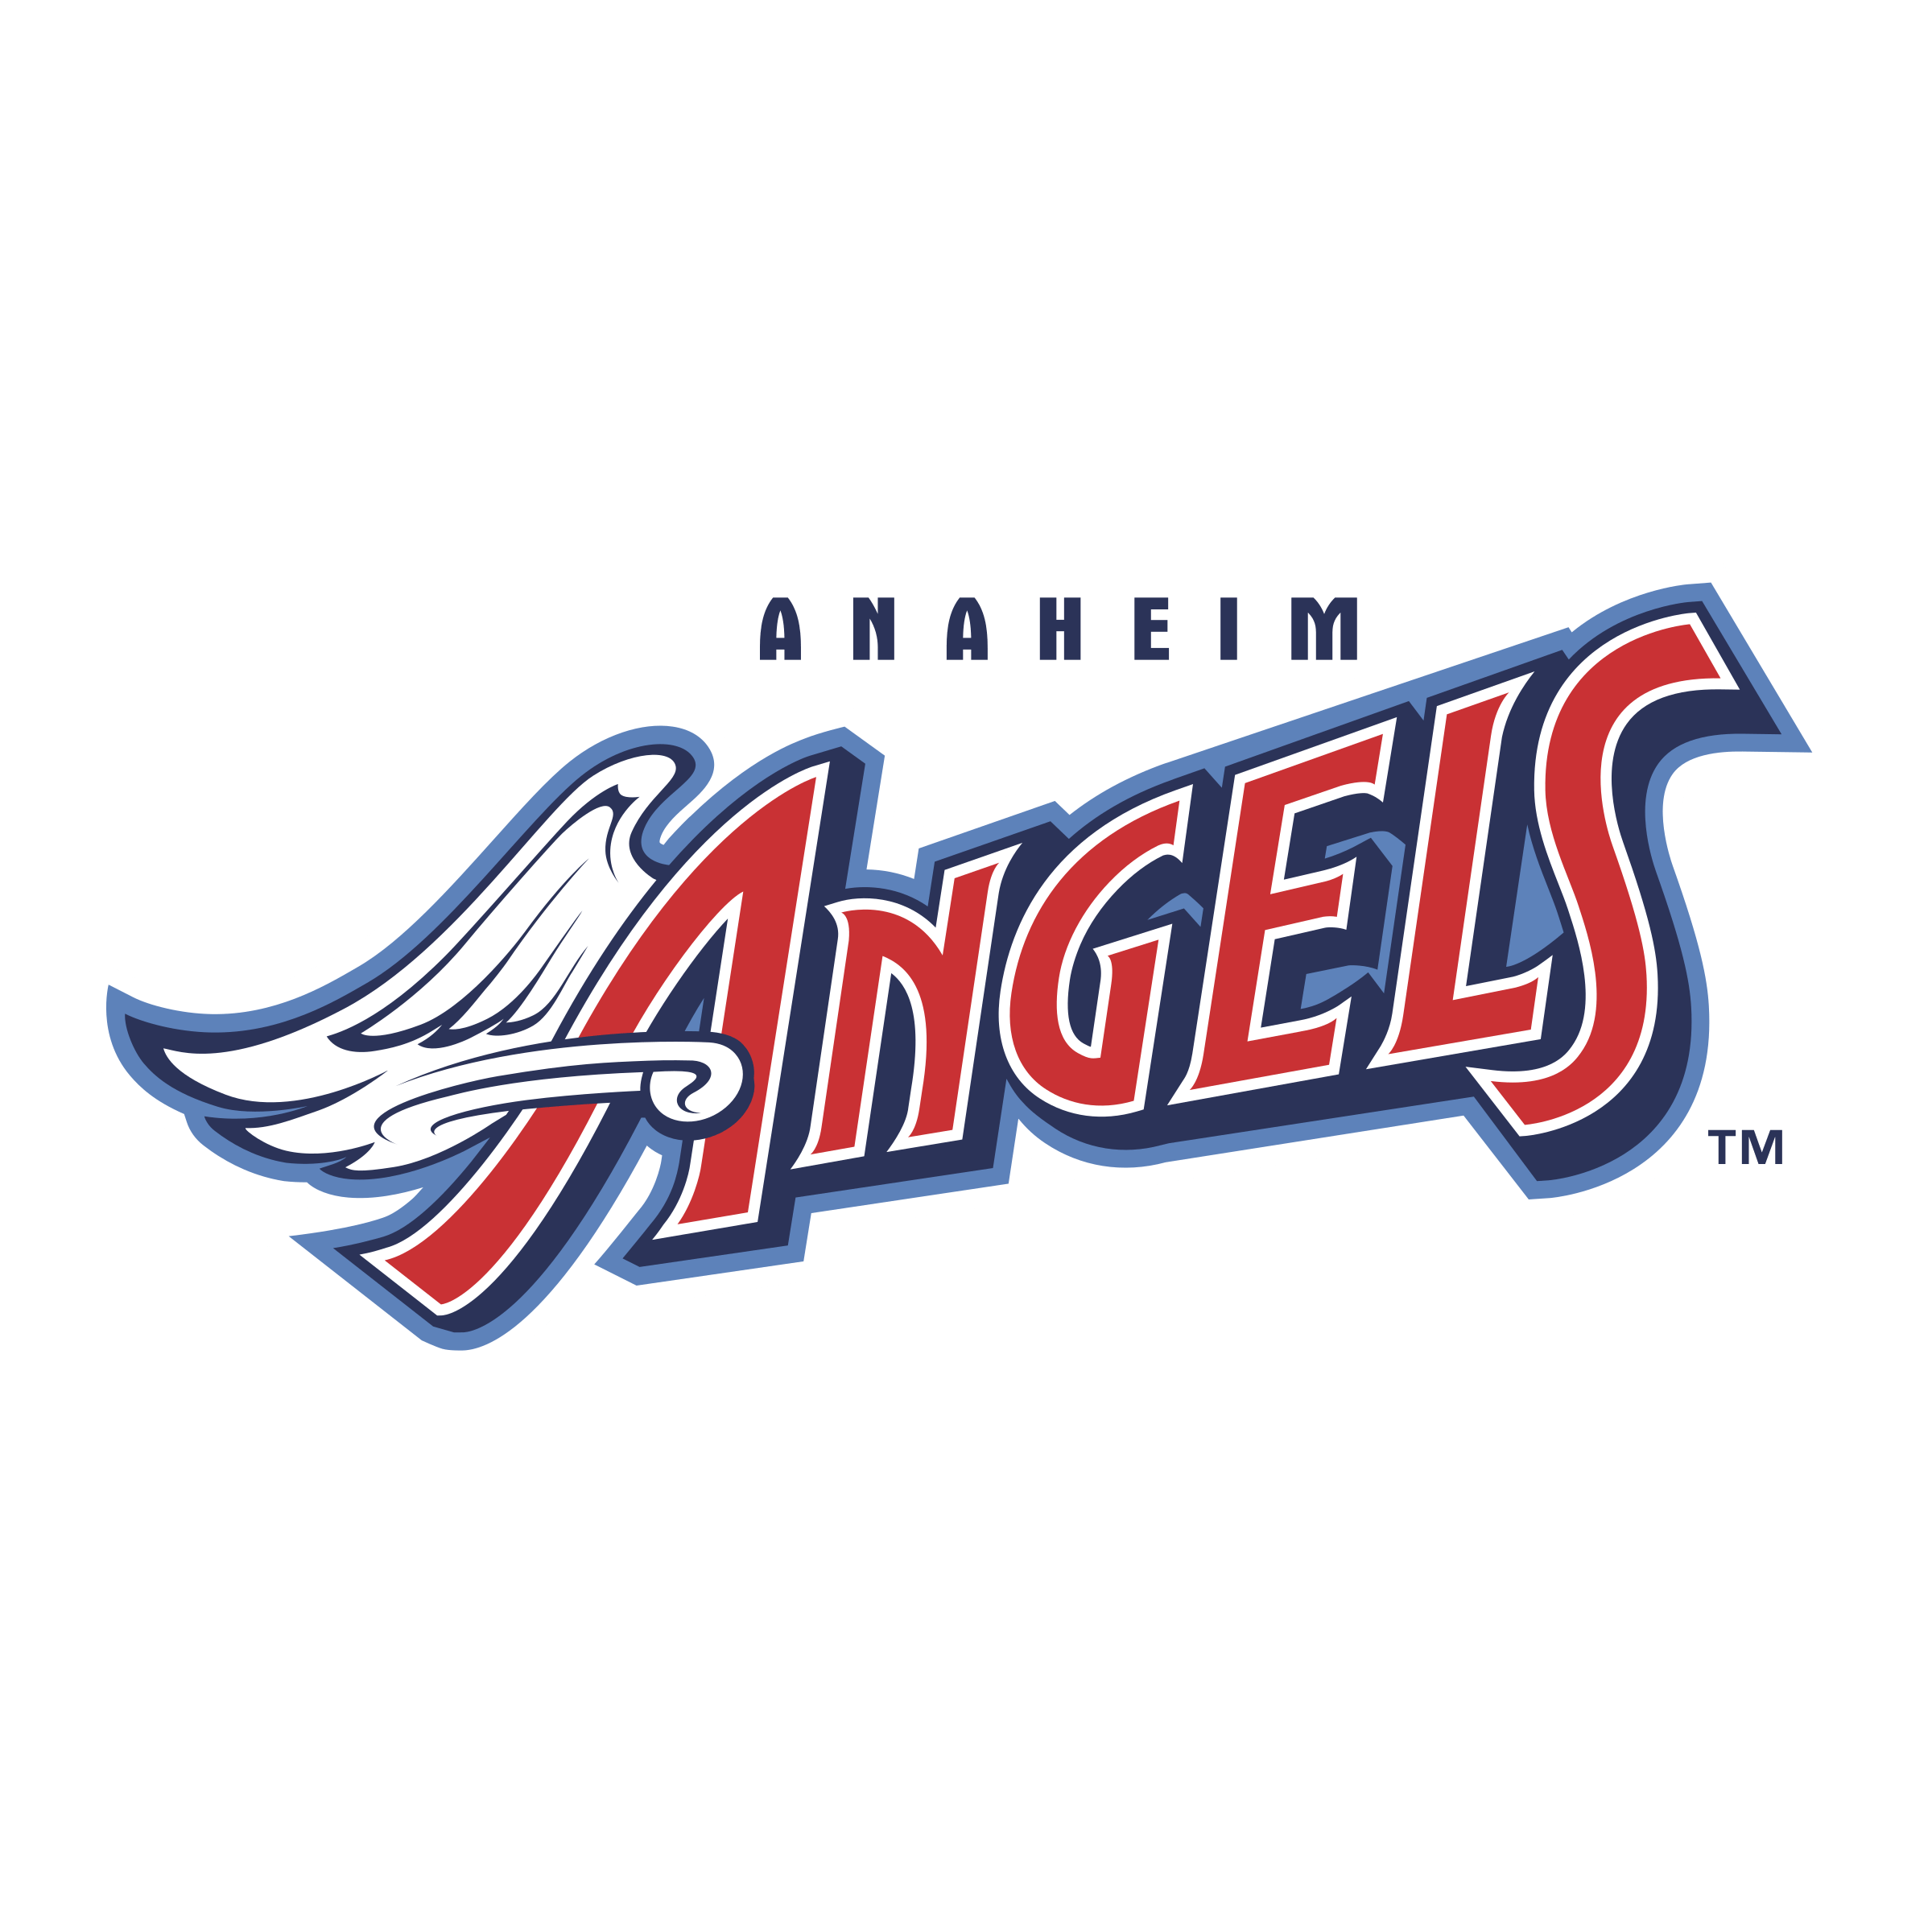 Anaheim Angels Logo - Anaheim Angels 02 Logo PNG Transparent & SVG Vector